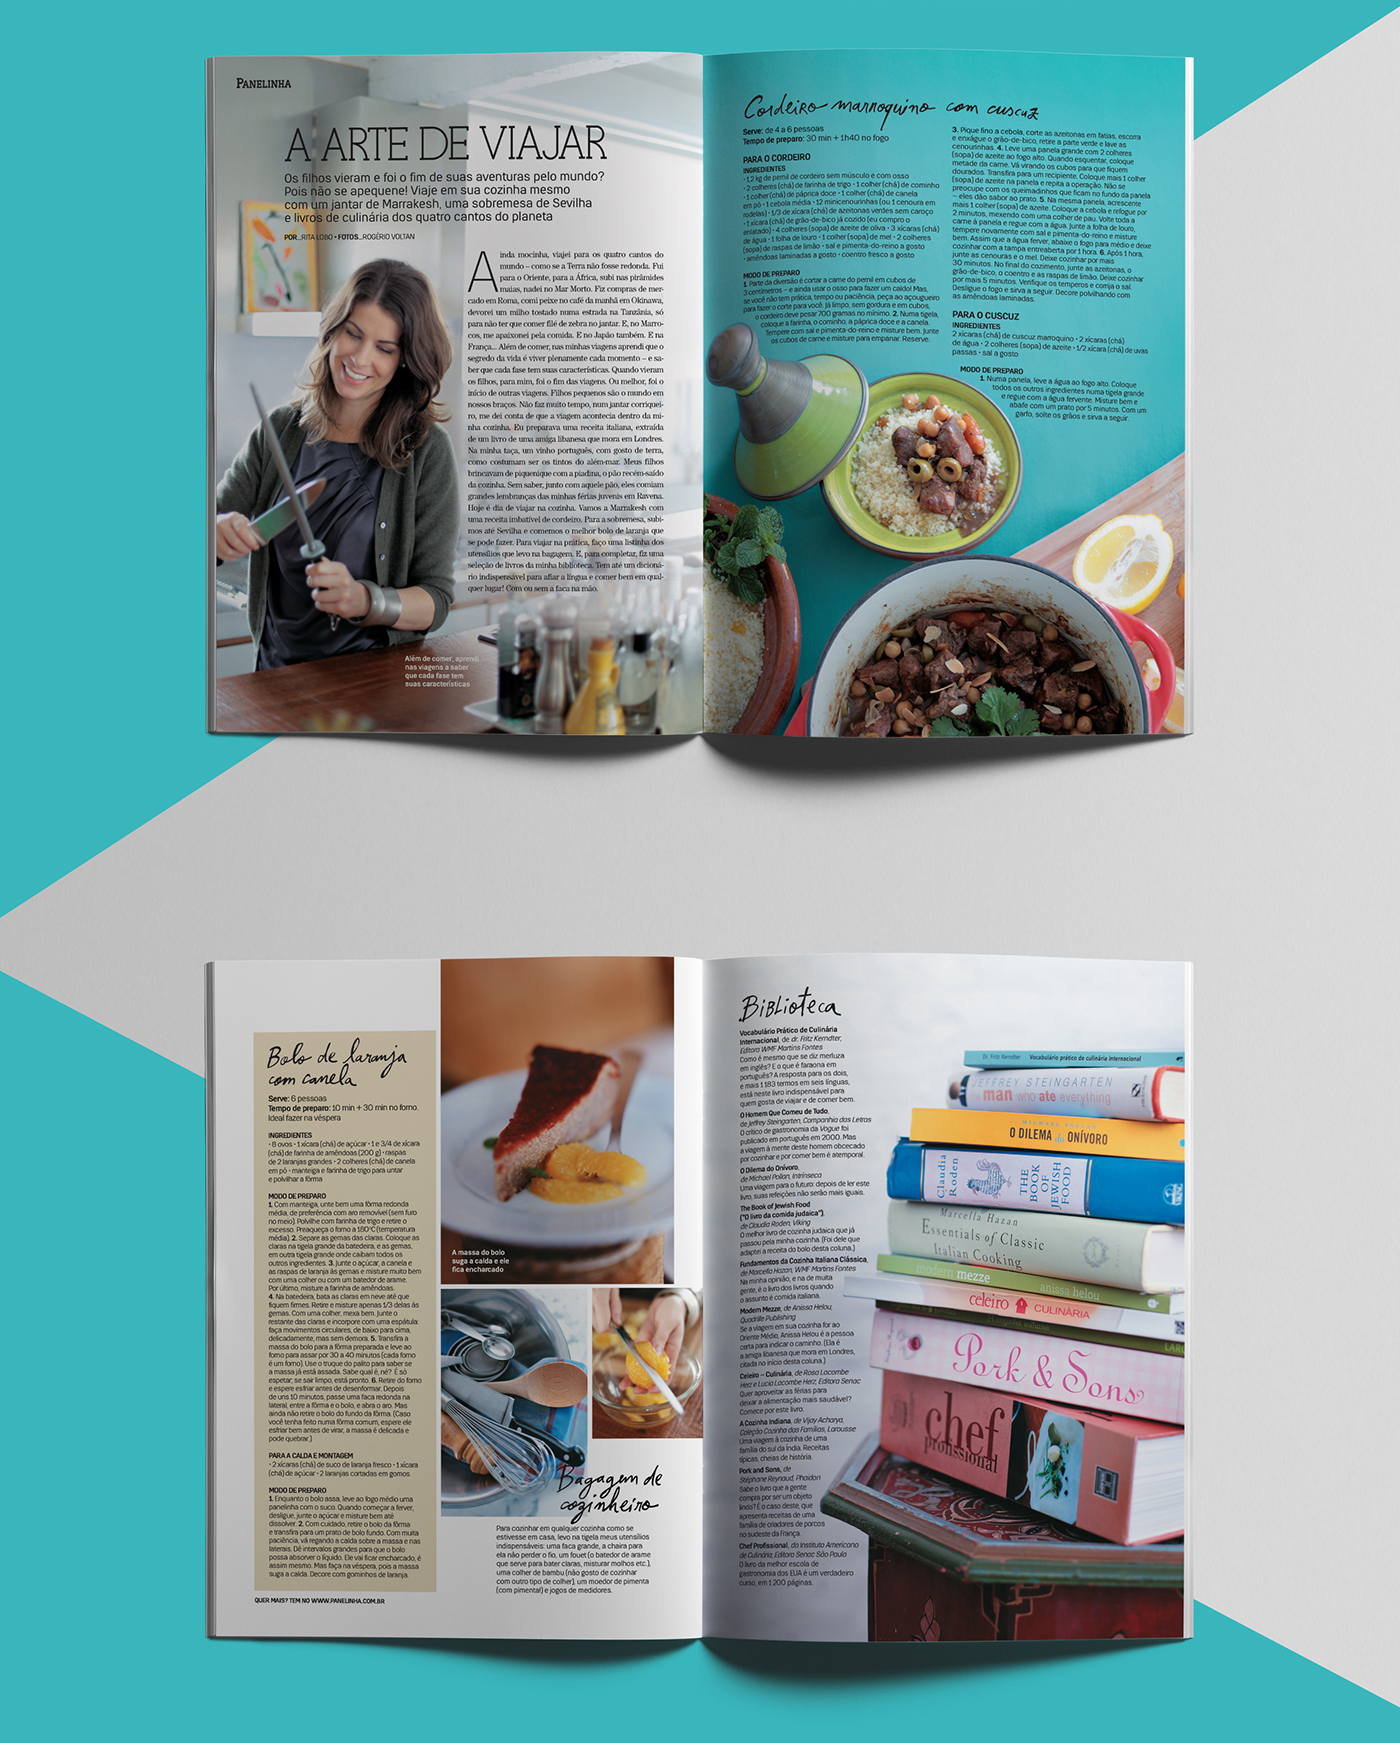 lola magazine revista lola Editora Abril viagem culinária magazine revista Culinary Travel Layout